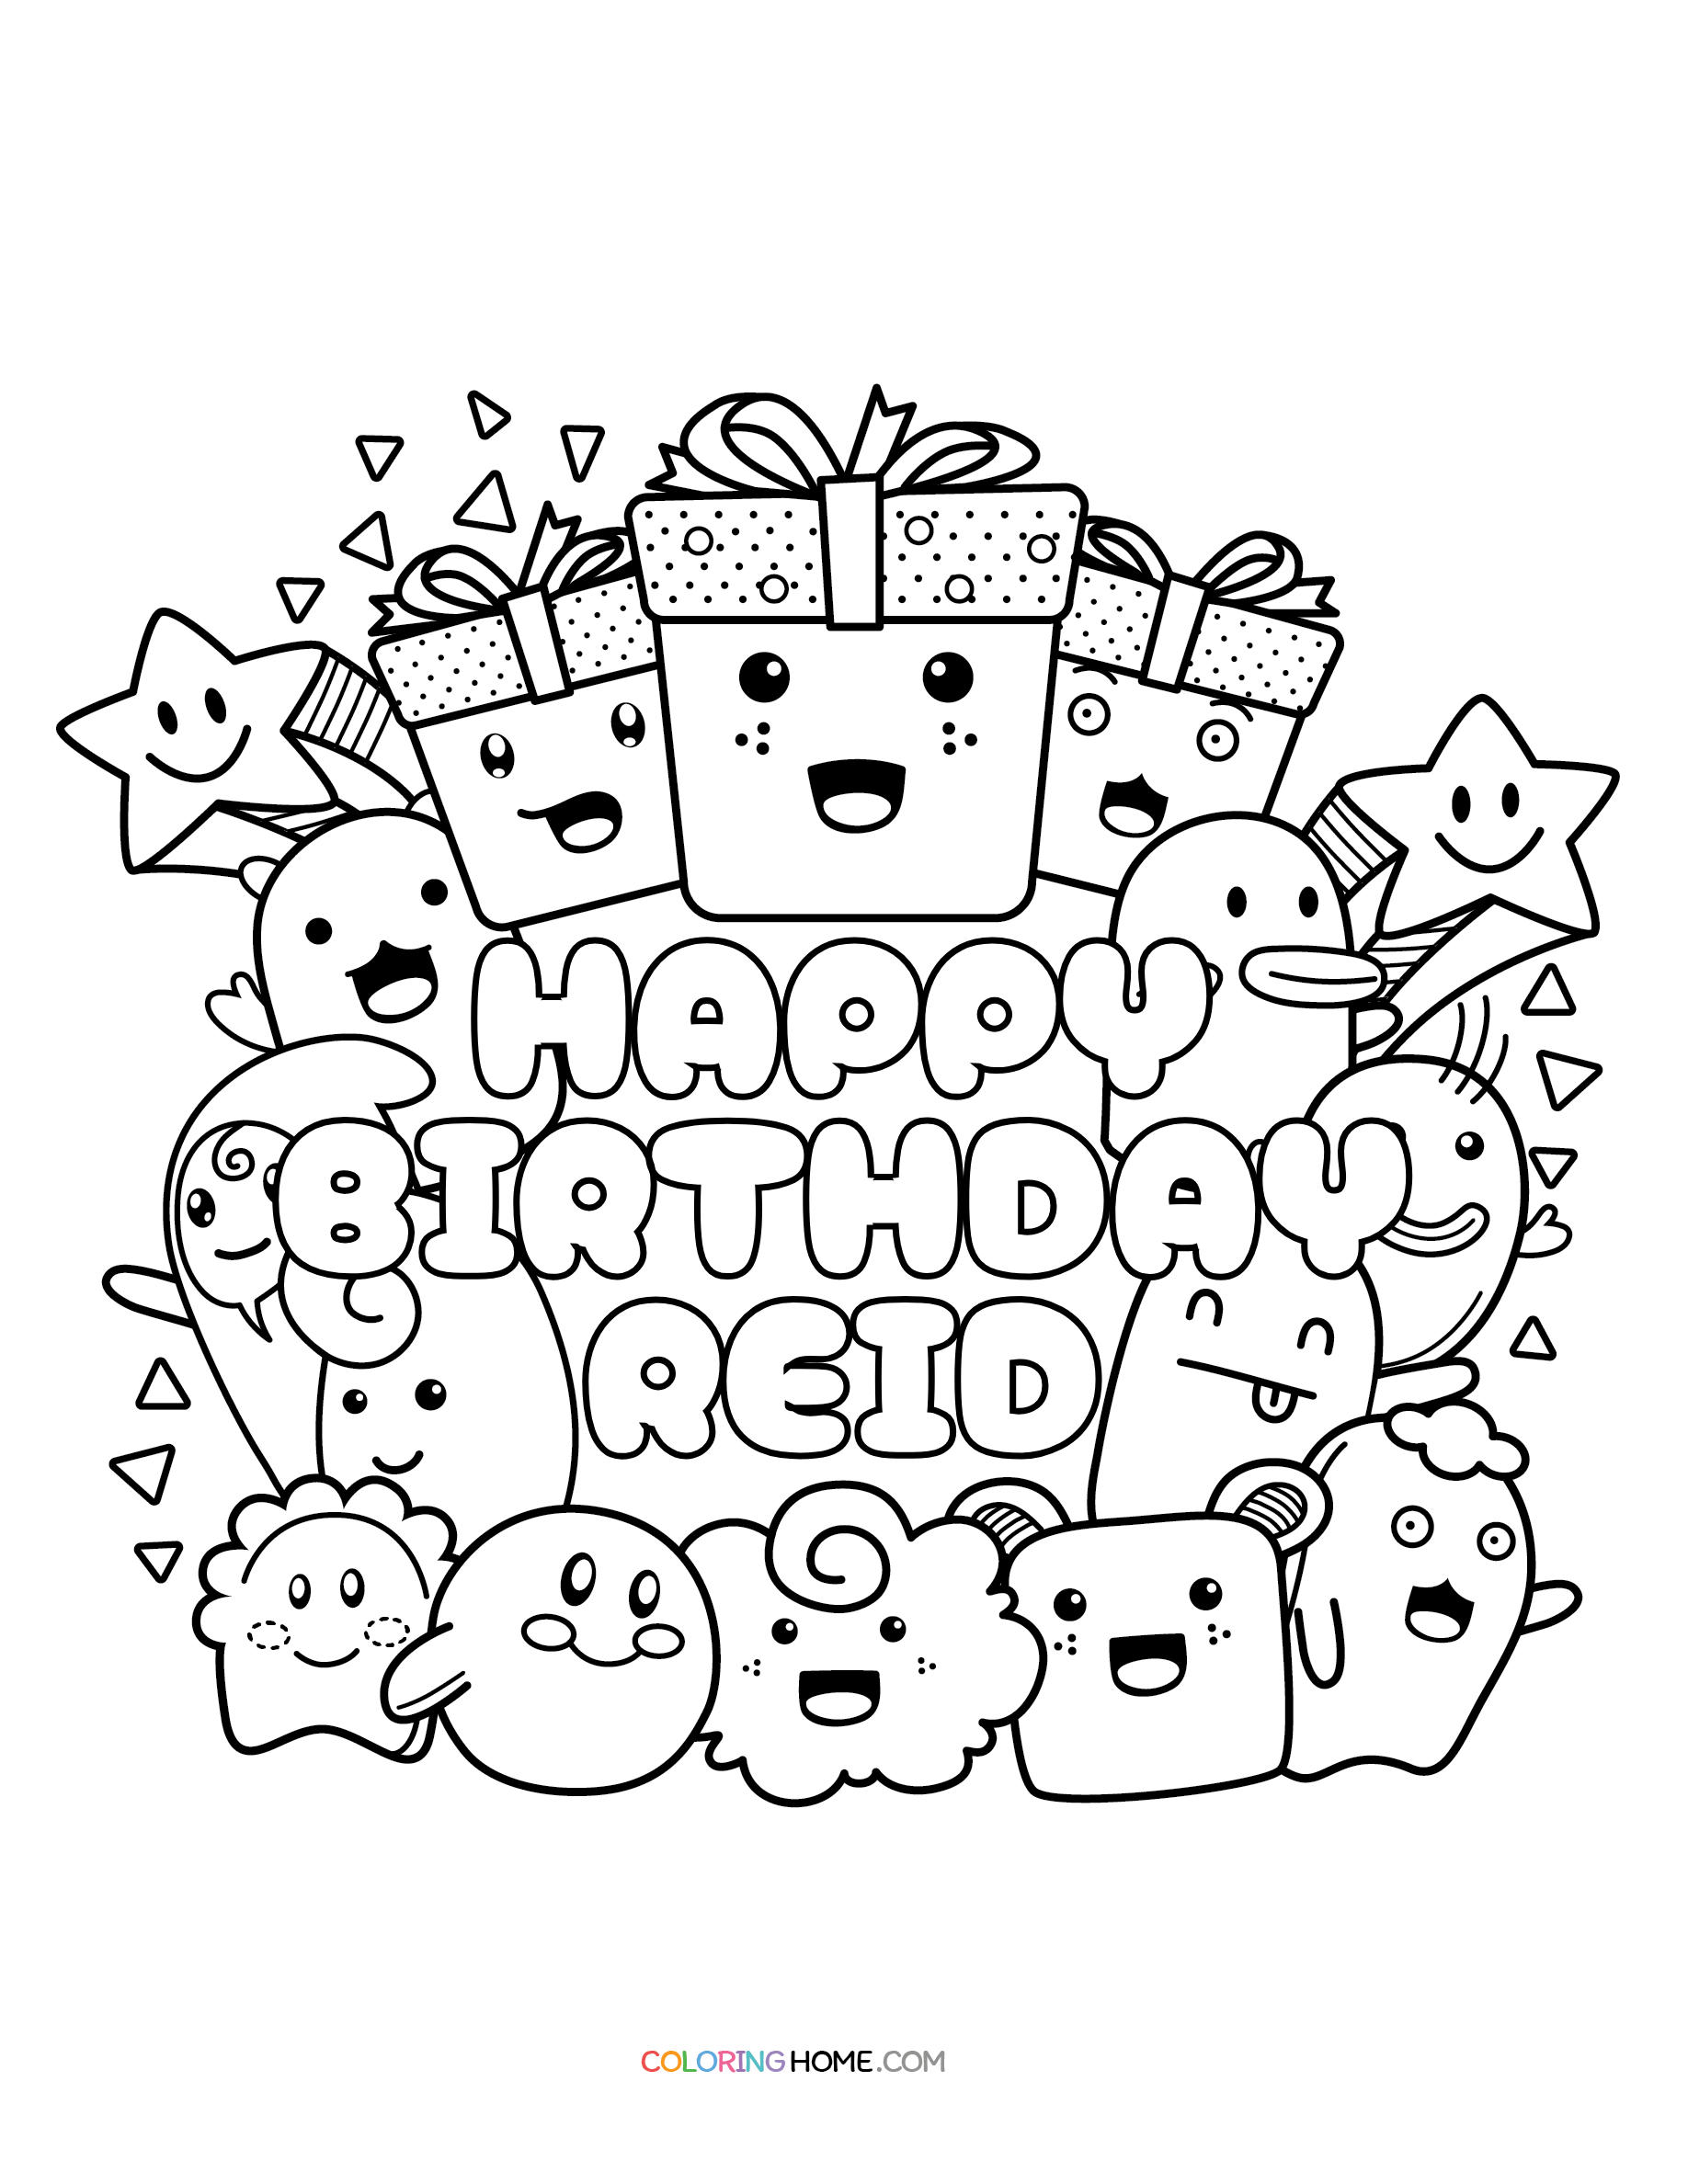 Happy Birthday Reid coloring page